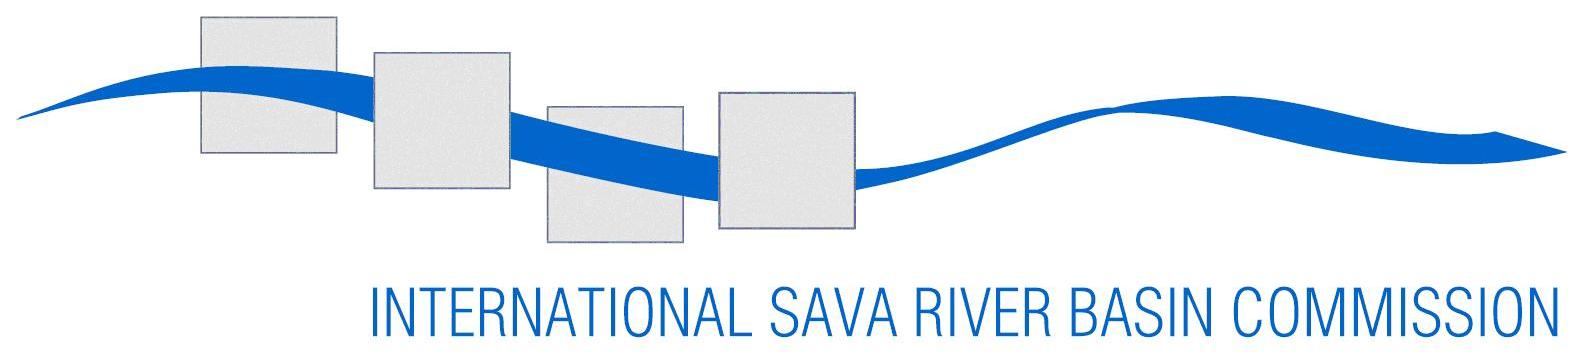 logo for International Sava River Basin Commission